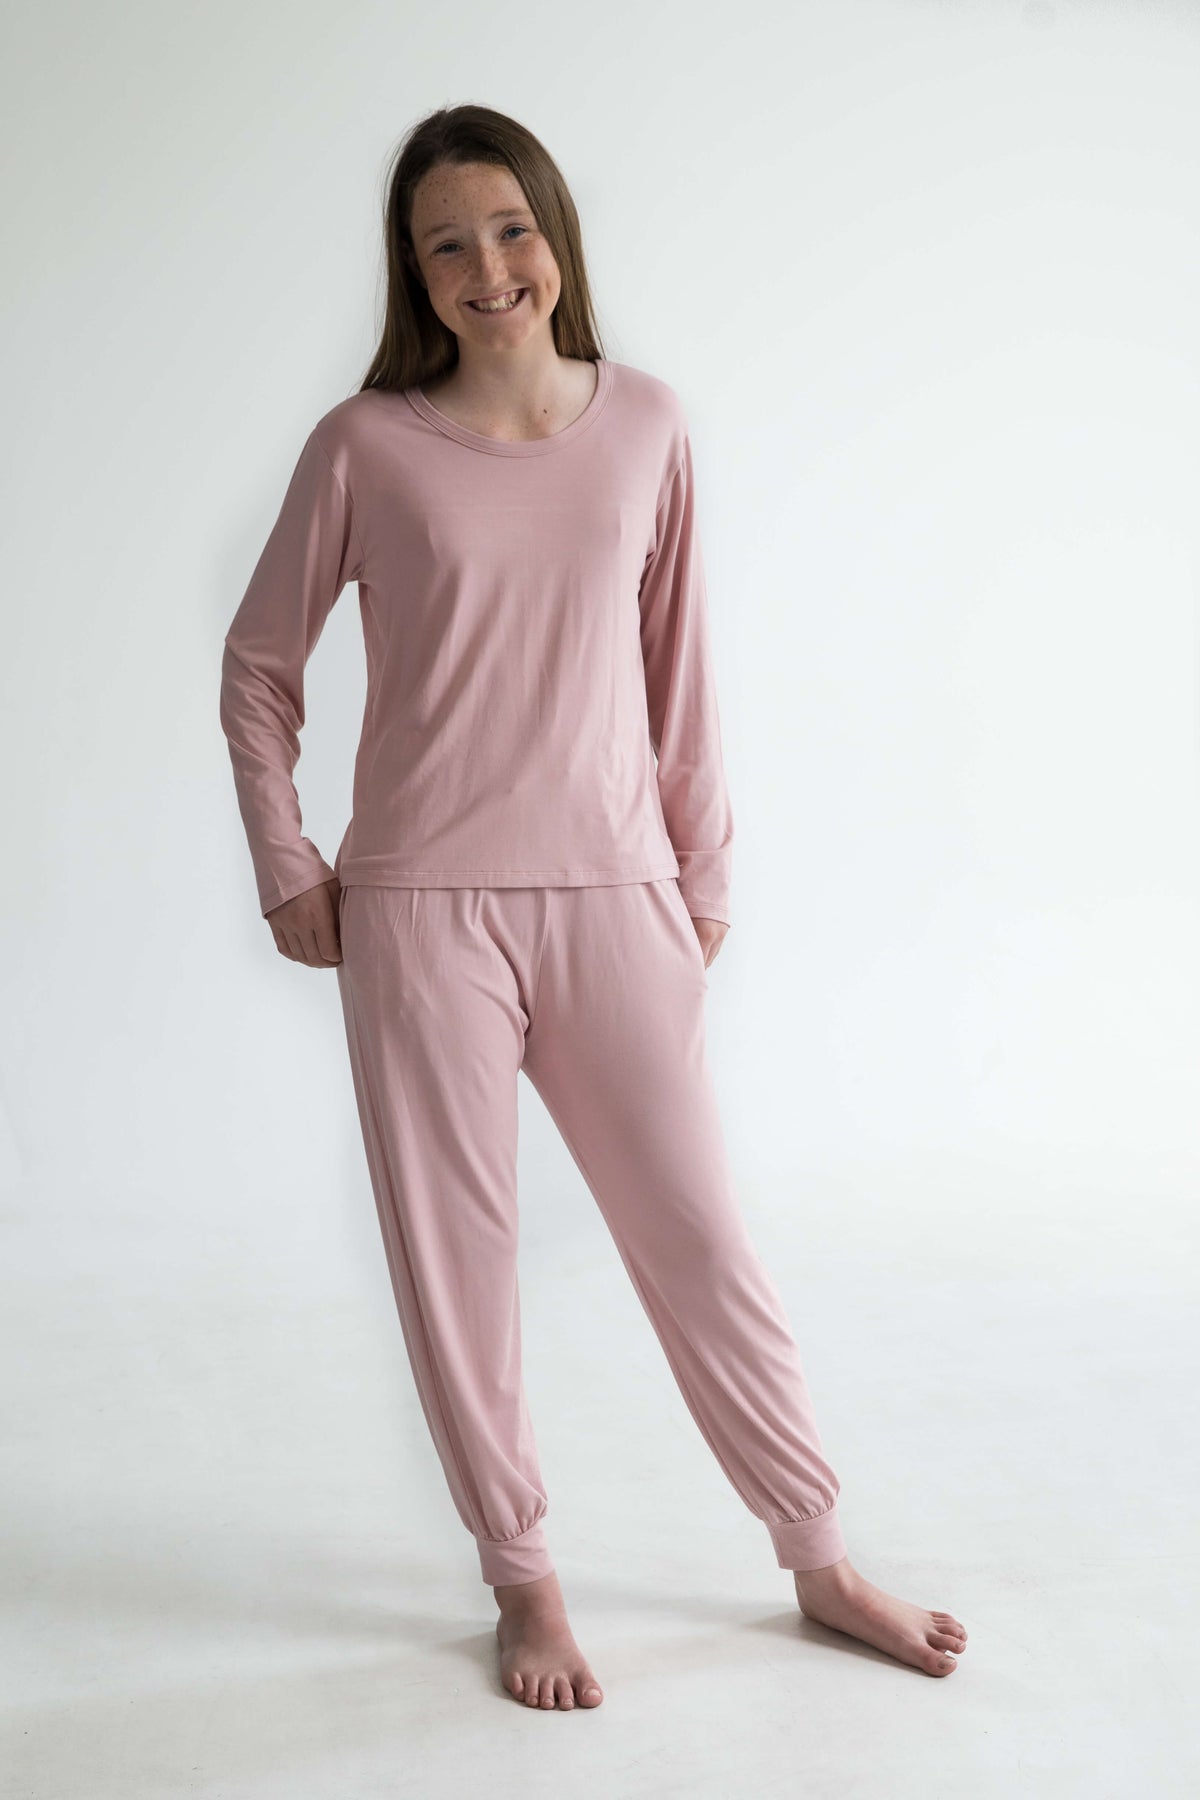 pink girls winter pyjamas set long pants and long sleeve top by Love Haidee Australia front